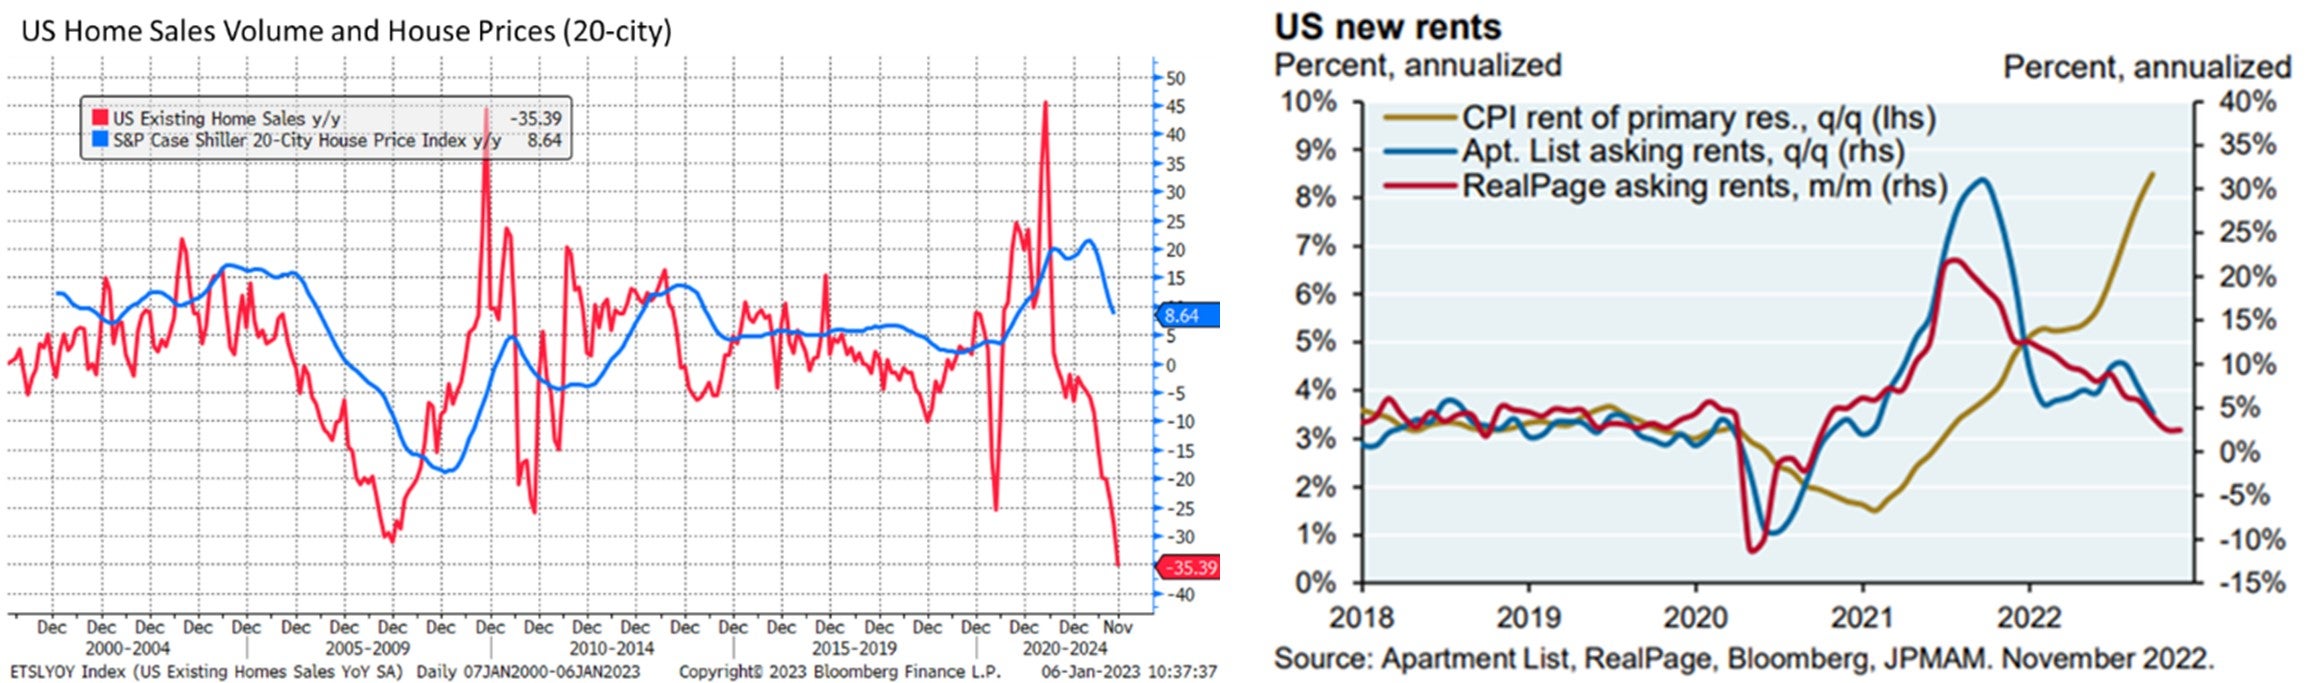 Line graph showng U.S Home Sales